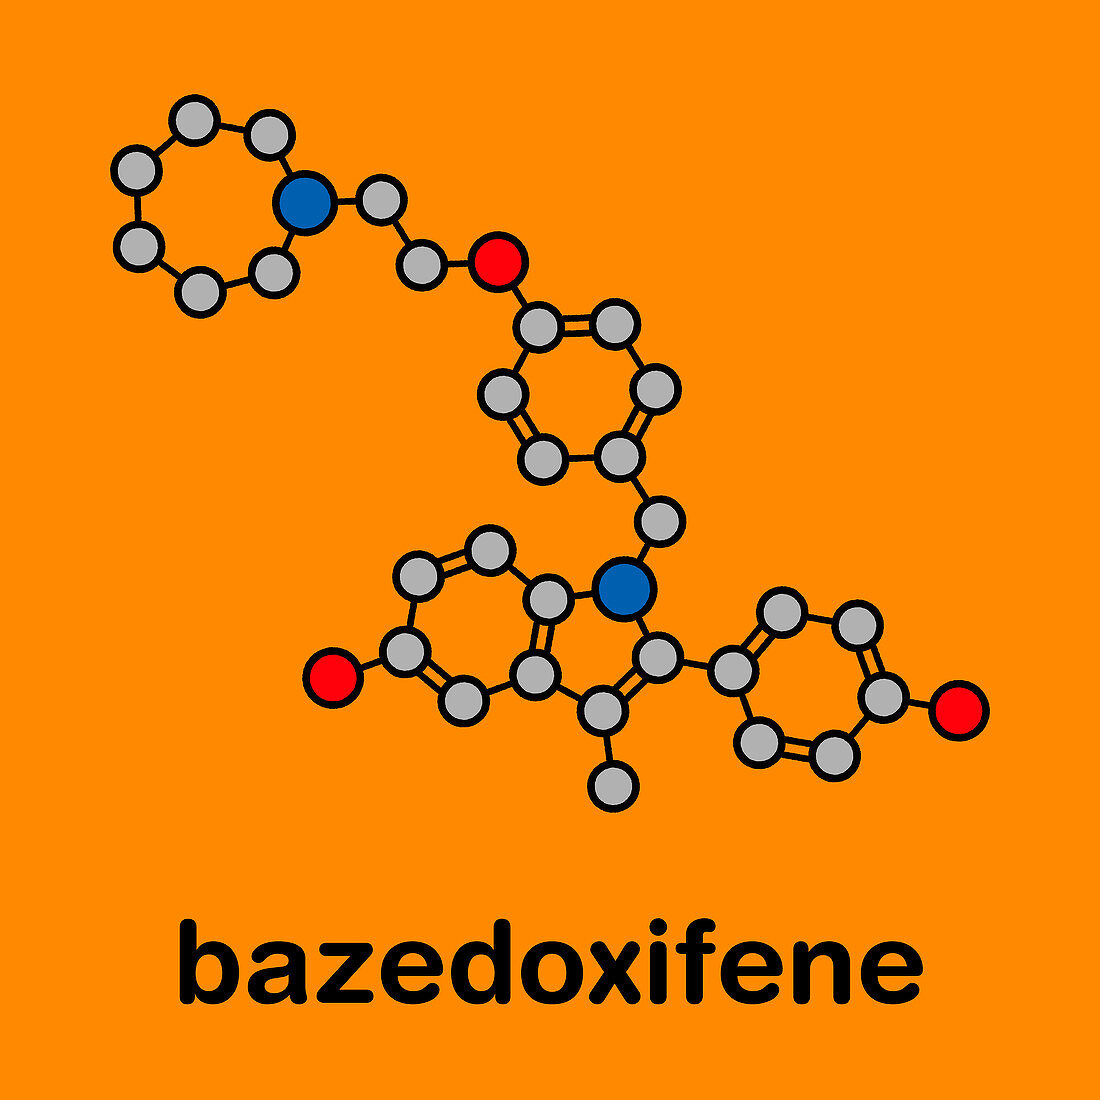 Bazedoxifene osteoporosis prevention drug, molecular model